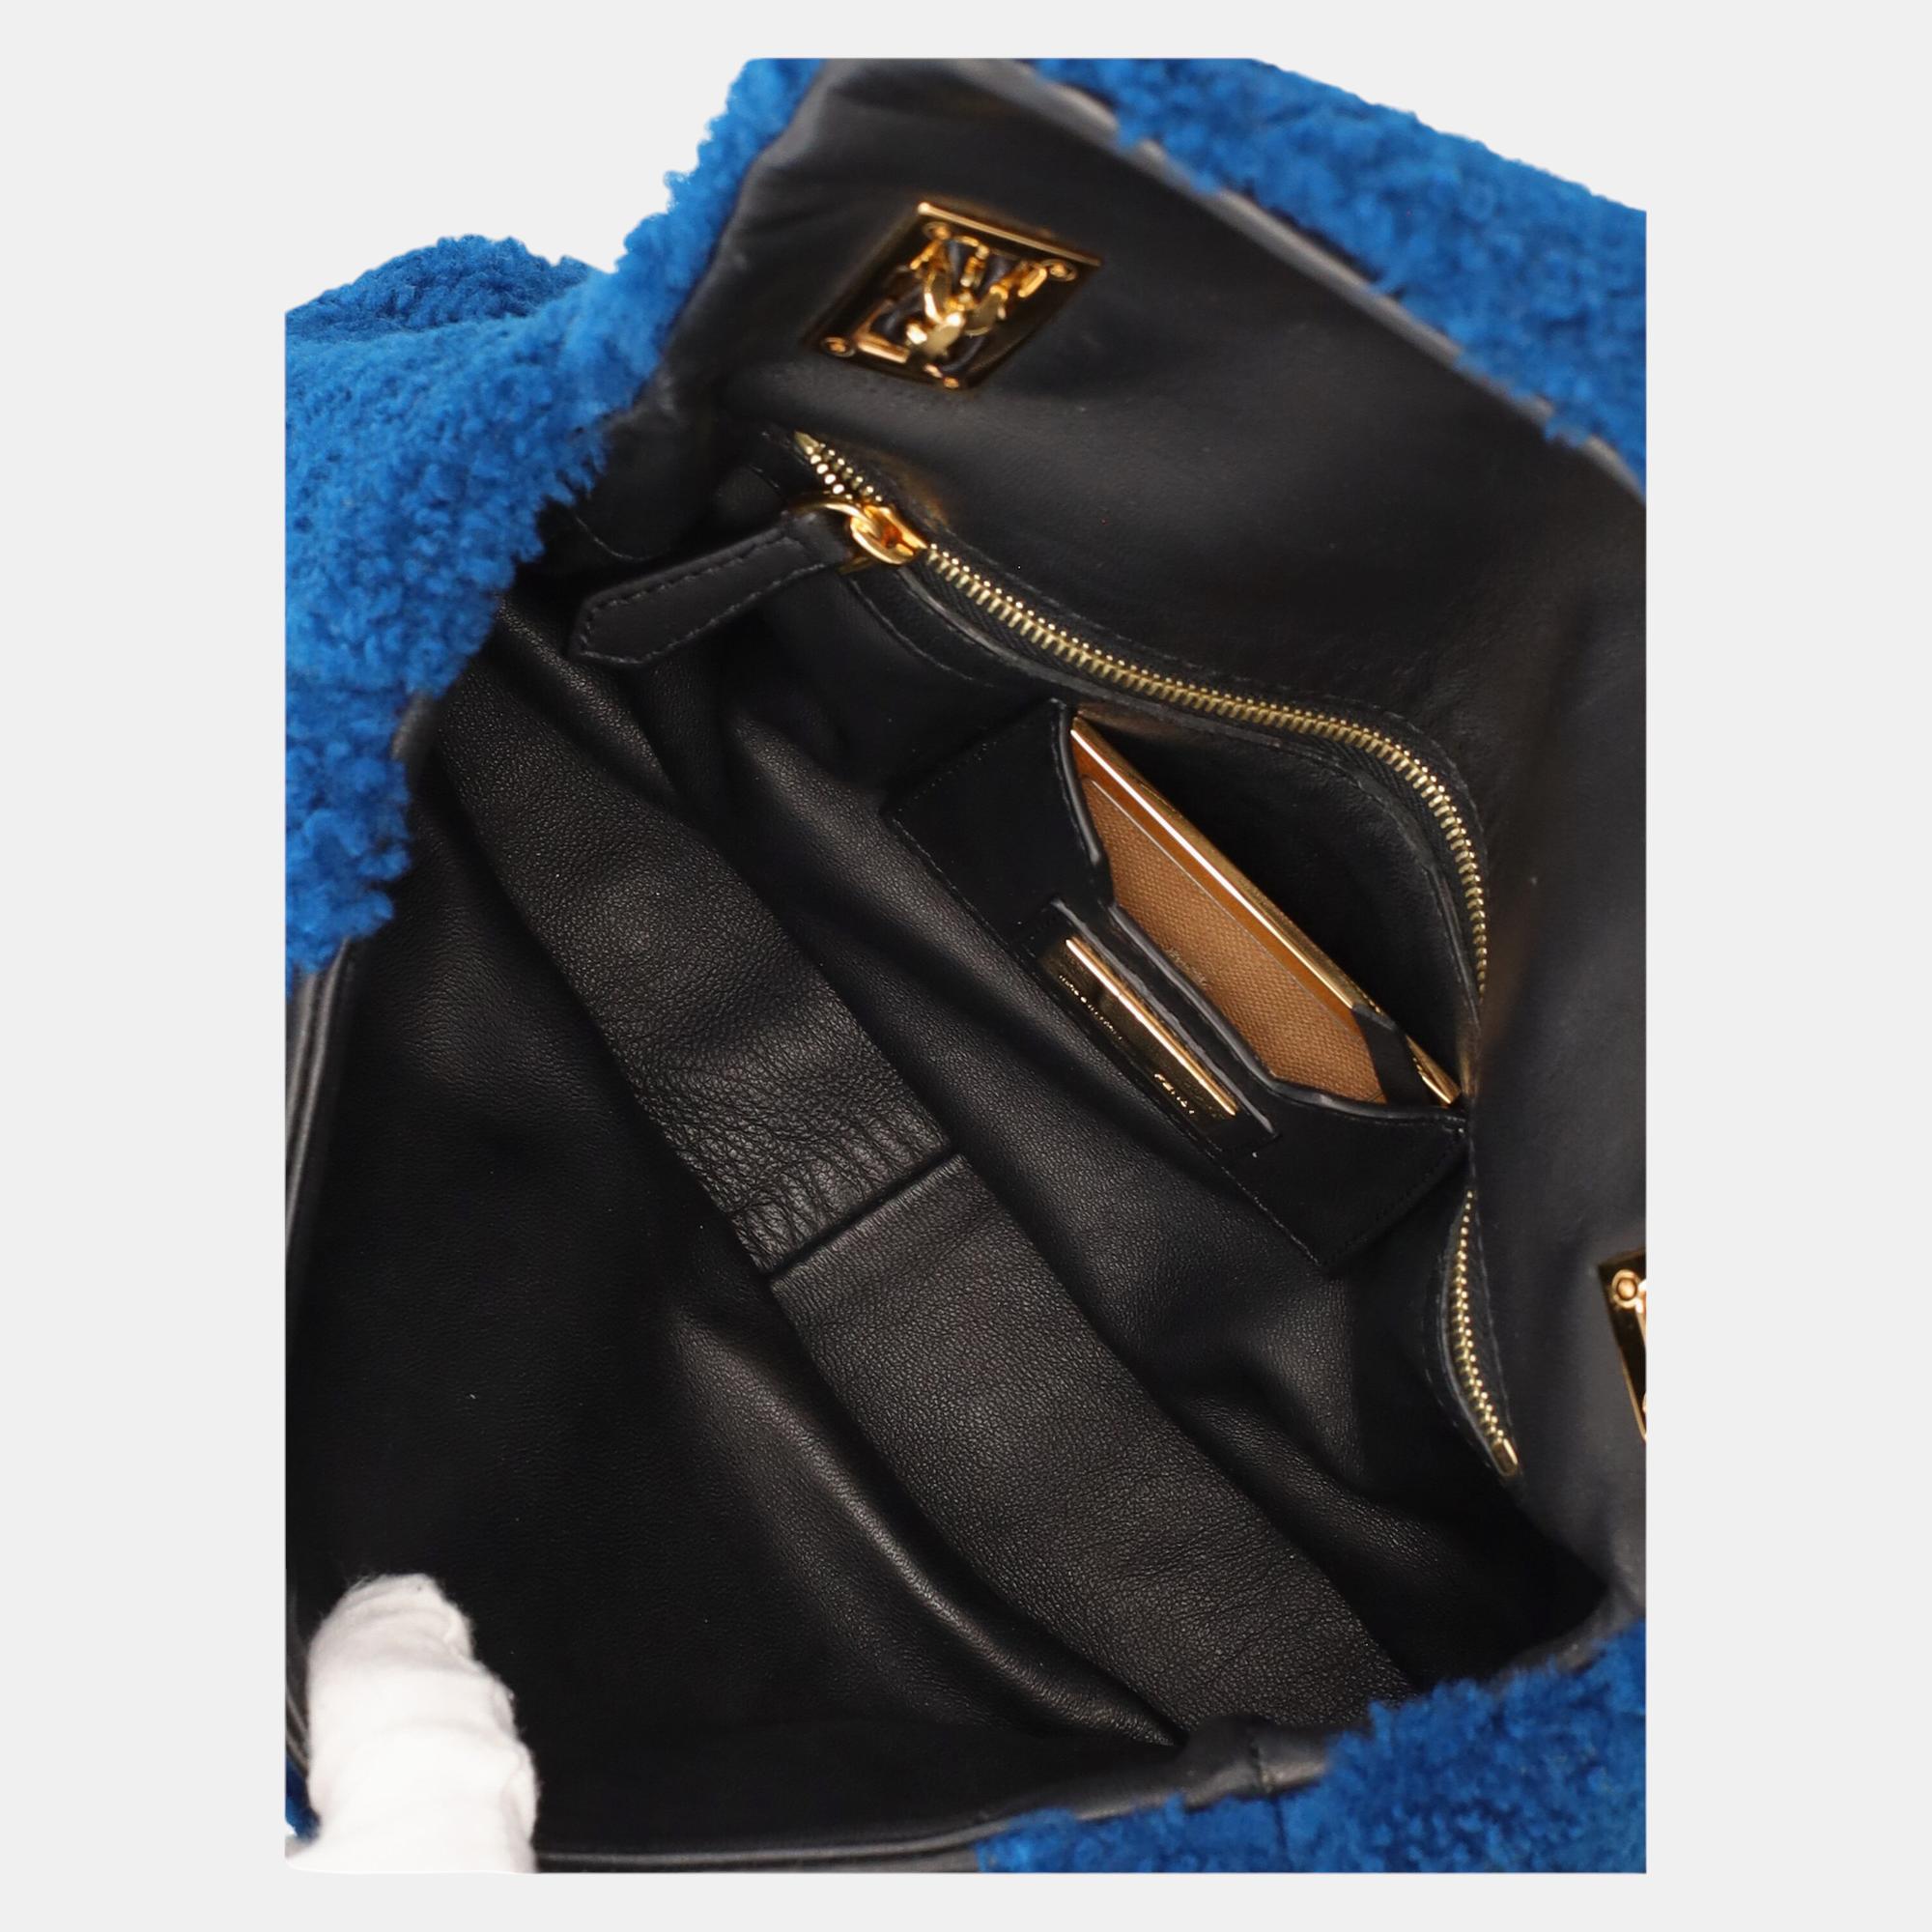 Fendi  Women's Leather Cross Body Bag - Navy - One Size